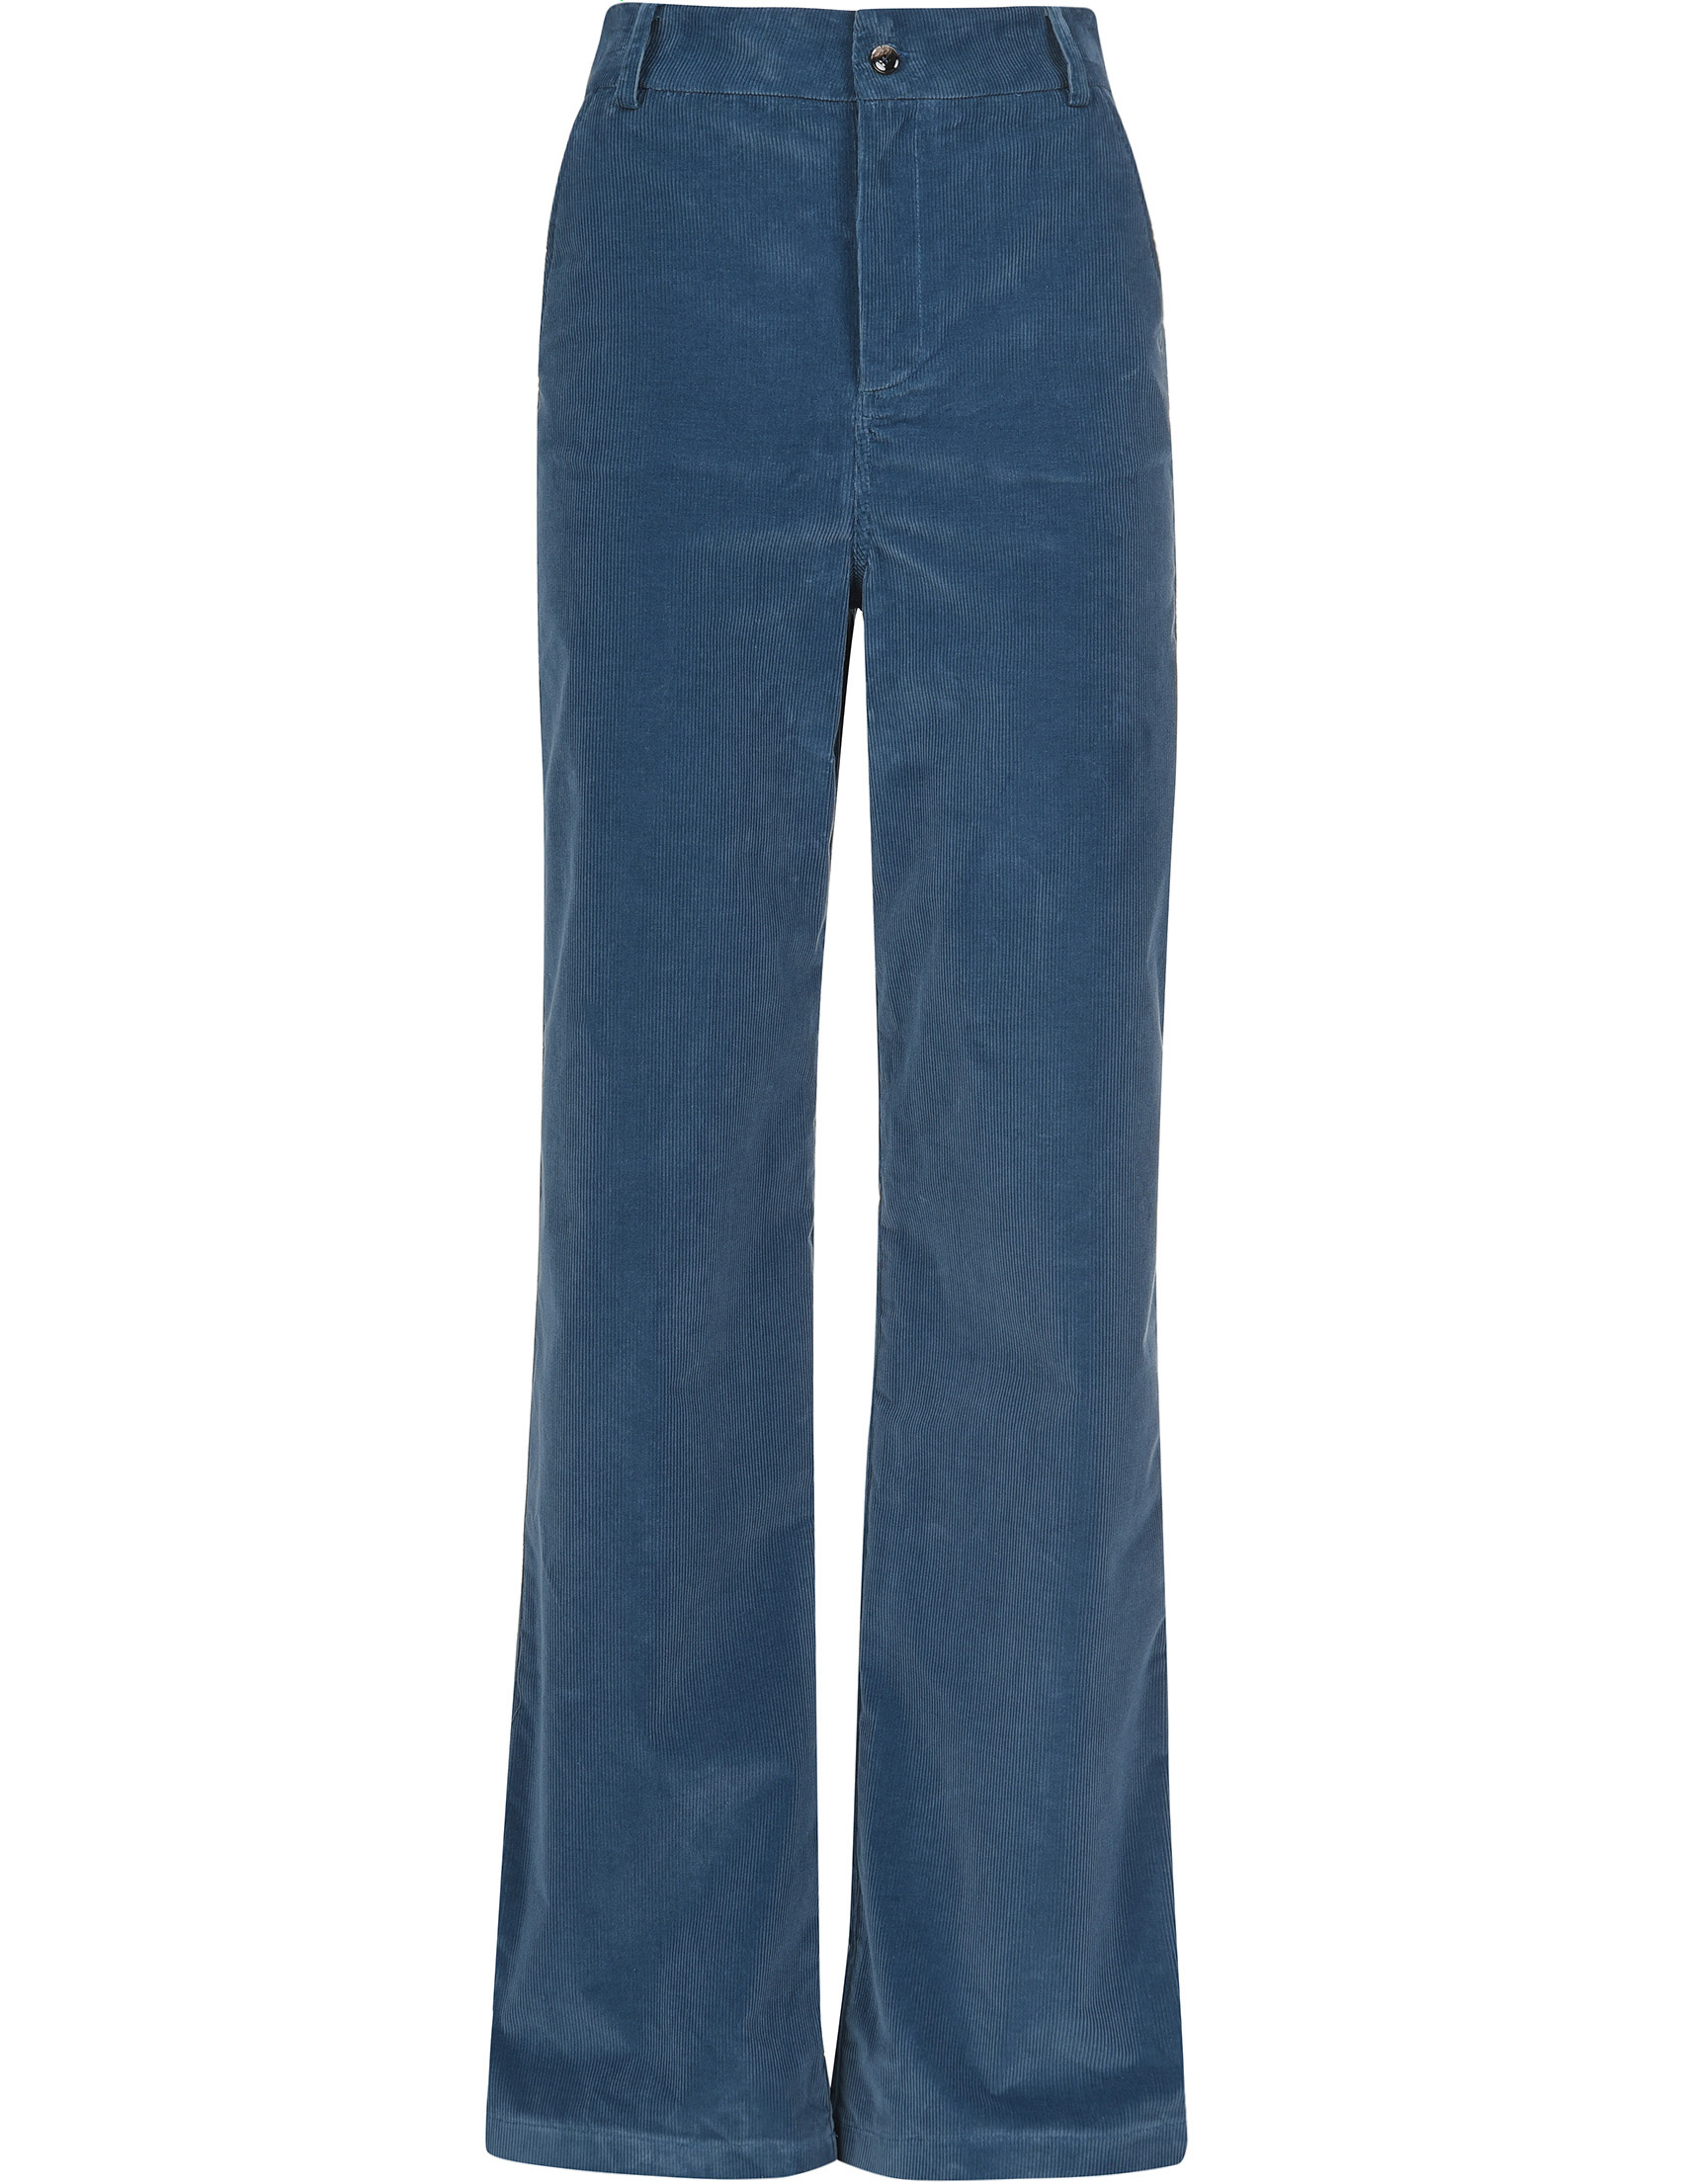 Женские брюки BALLANTYNE NLT002-13743_blue